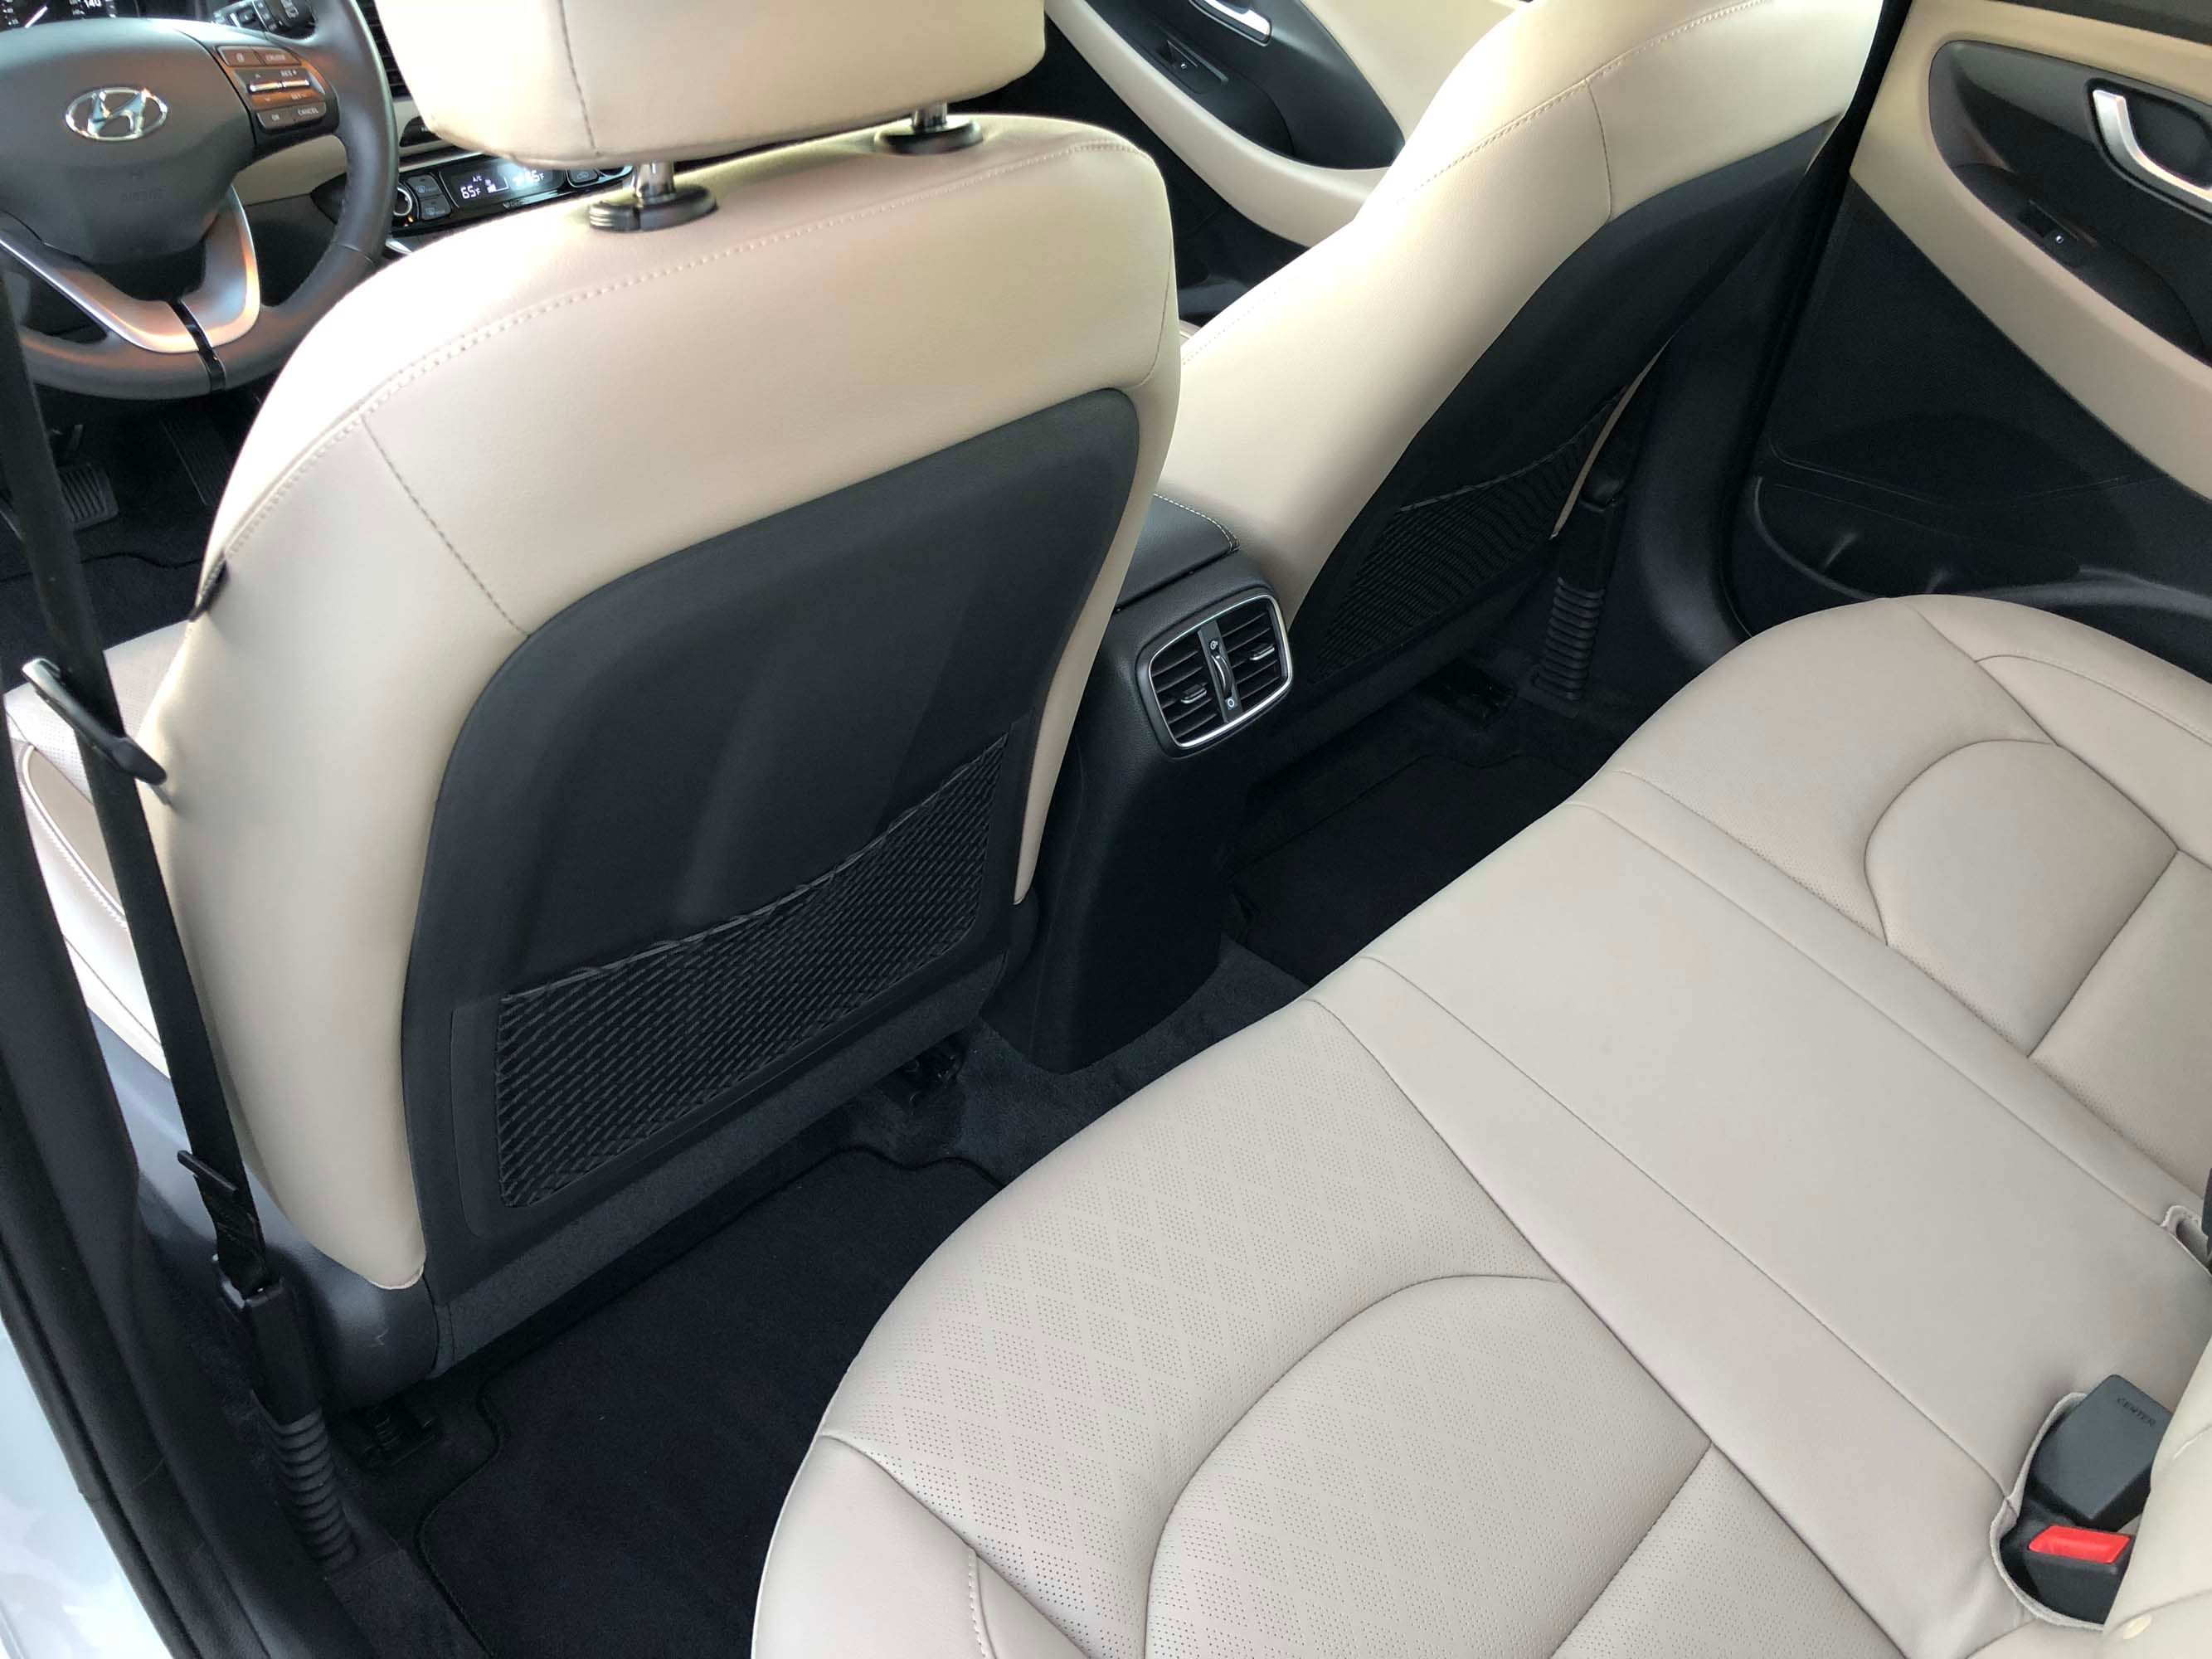 2018 Hyundai Elantra GT – Driven 